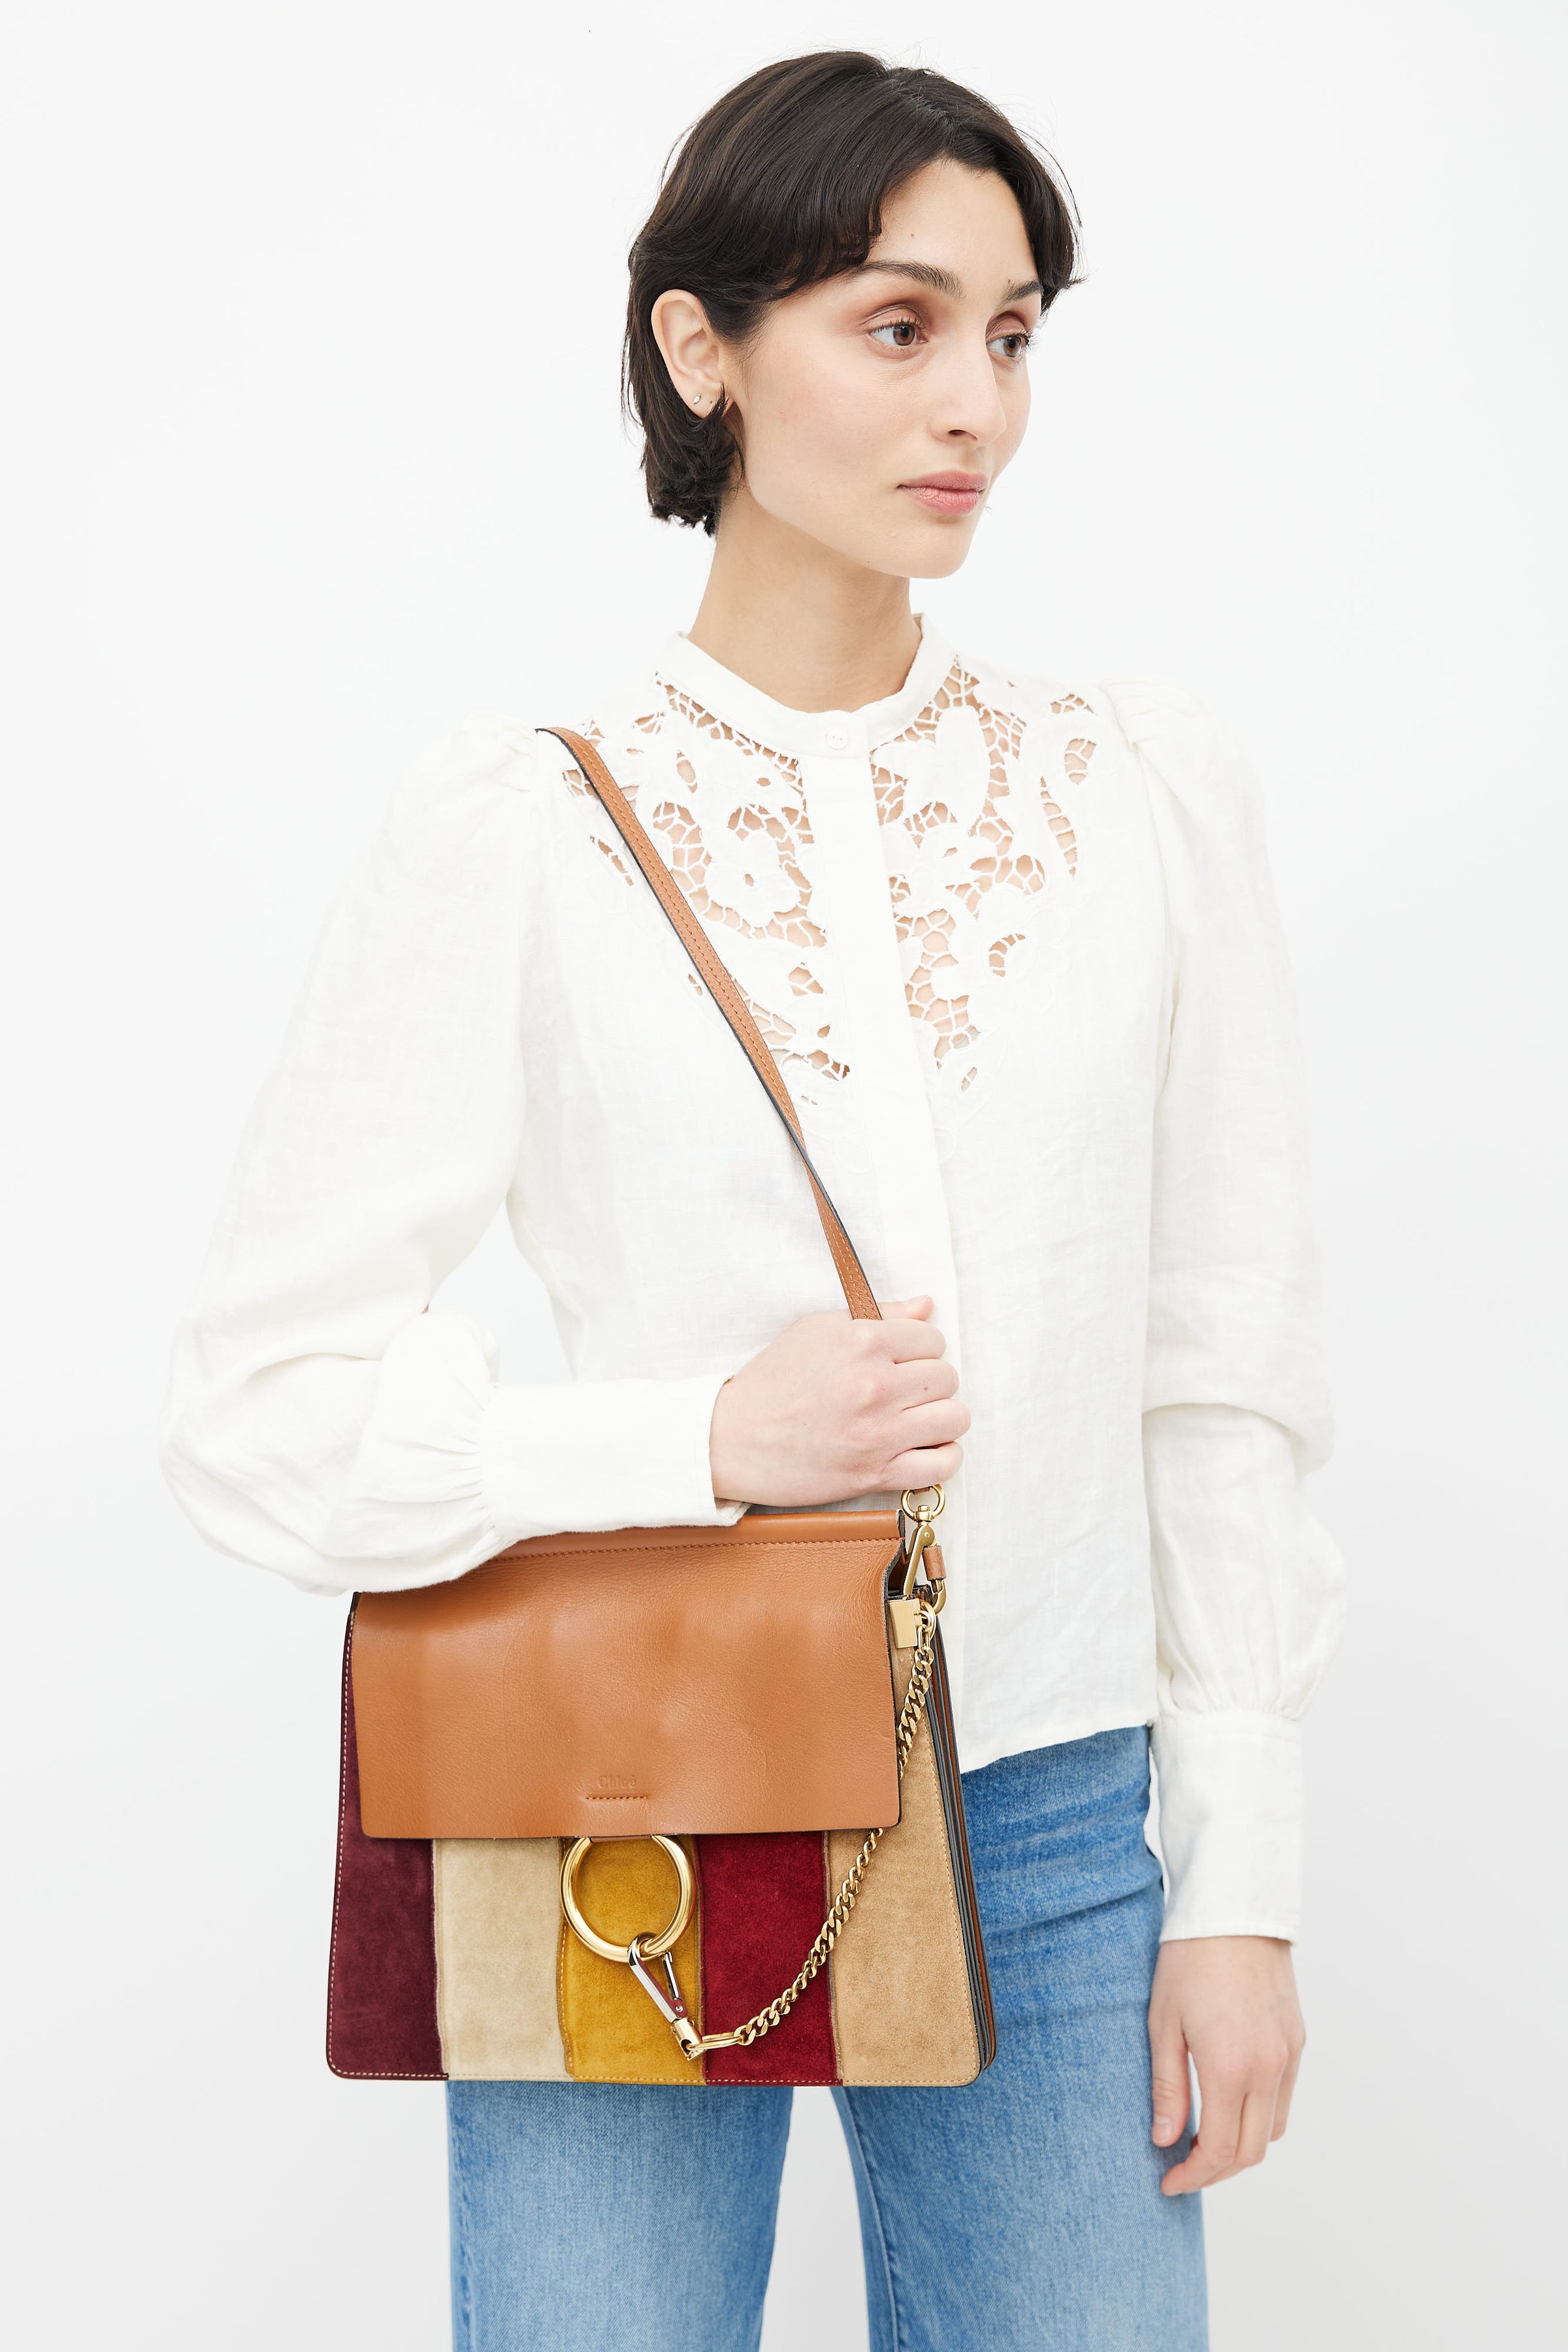 Chloé // Multicolour Leather & Suede Patchwork Faye Crossbody Bag